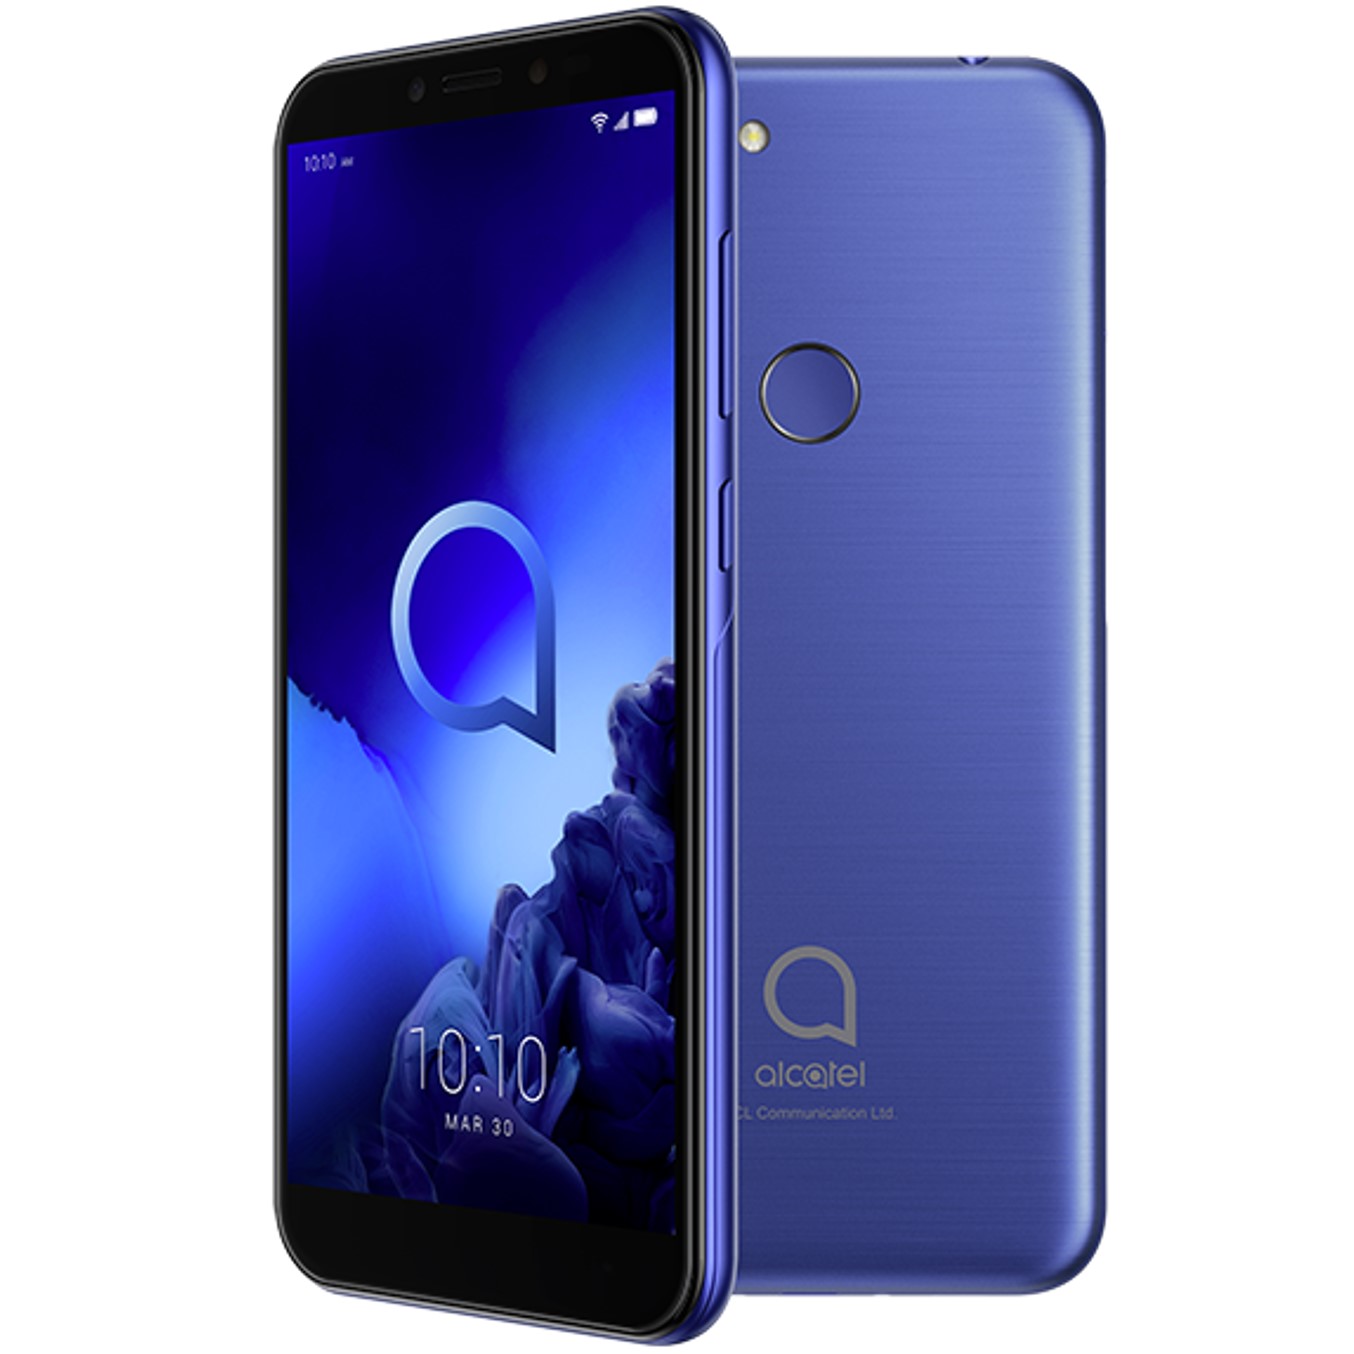 Telefono movil smartphone alcatel 1s azul -  5.5pulgadas - octa core - 32gb rom - 3gb ram - 13 + 2 mp -  5 mp - 4g - dual sim - lector huella